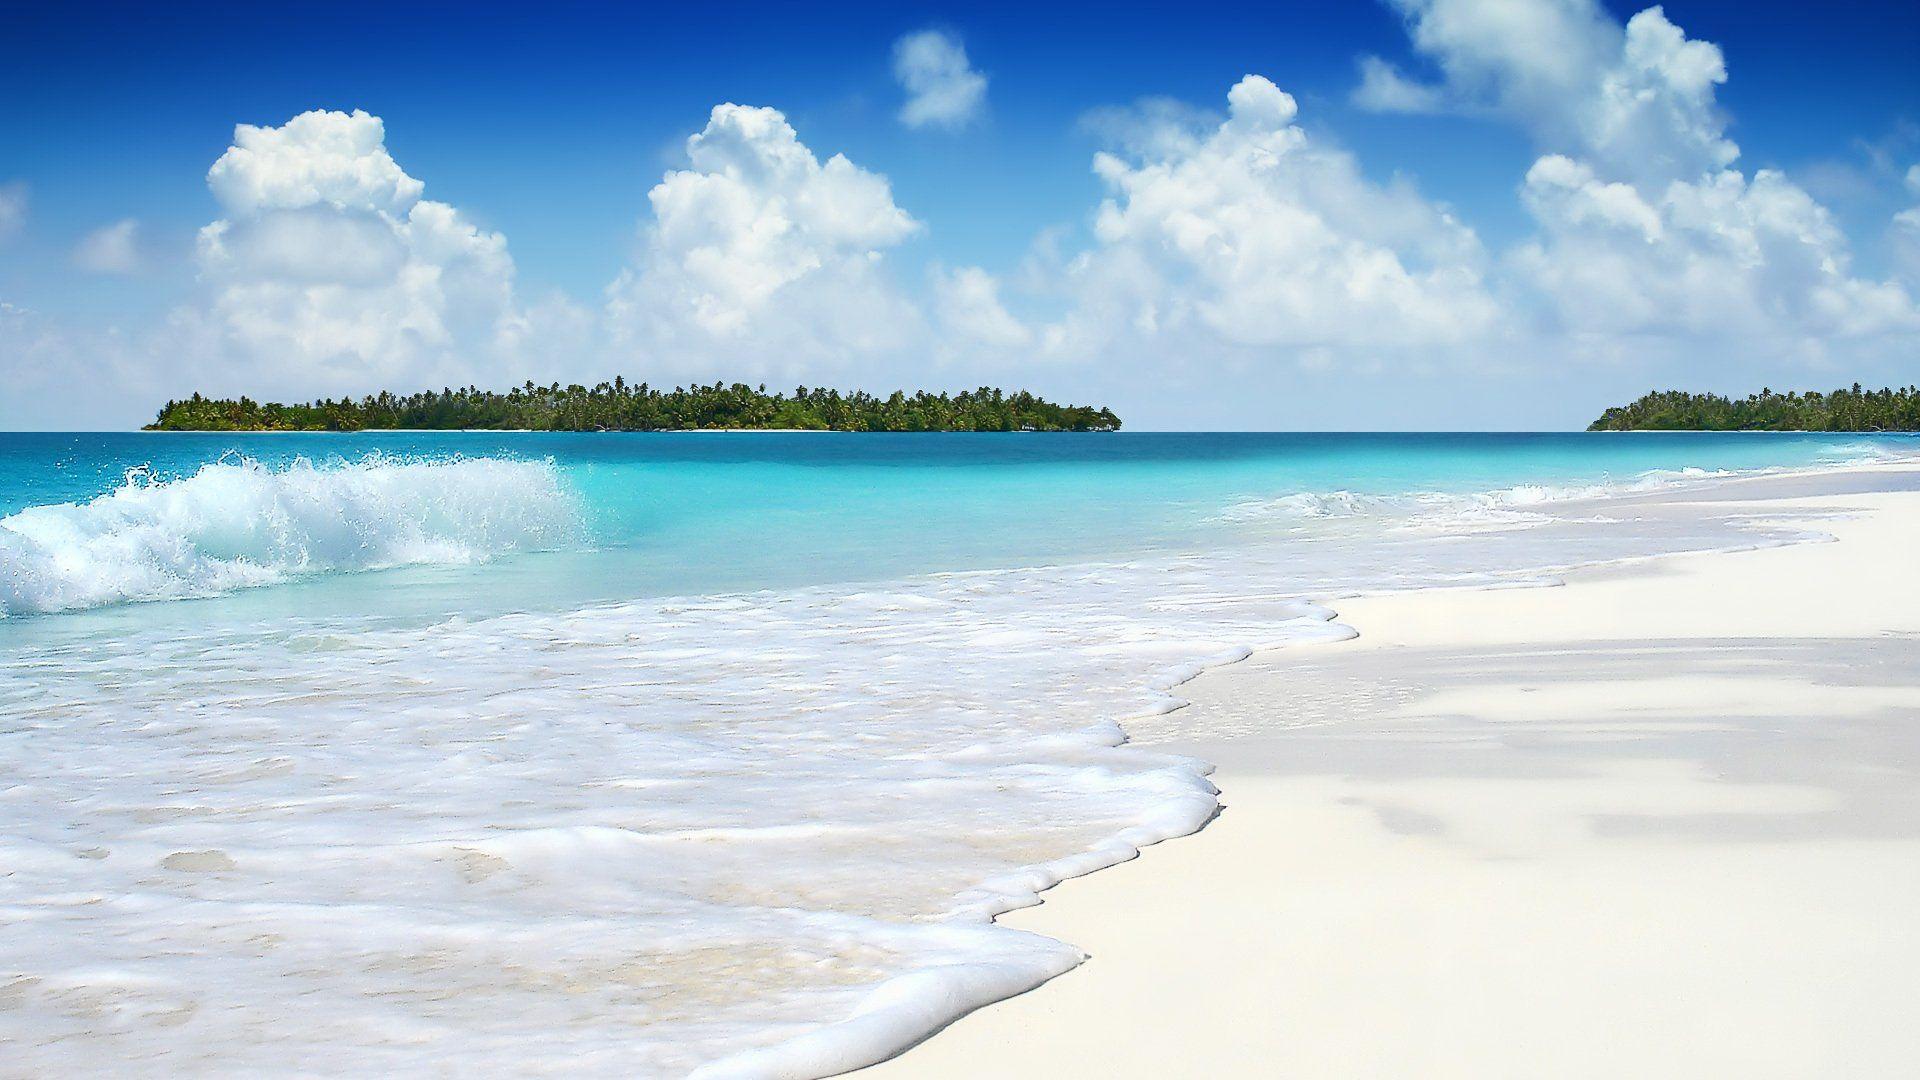 Maldives HD Wallpaper and Background Image